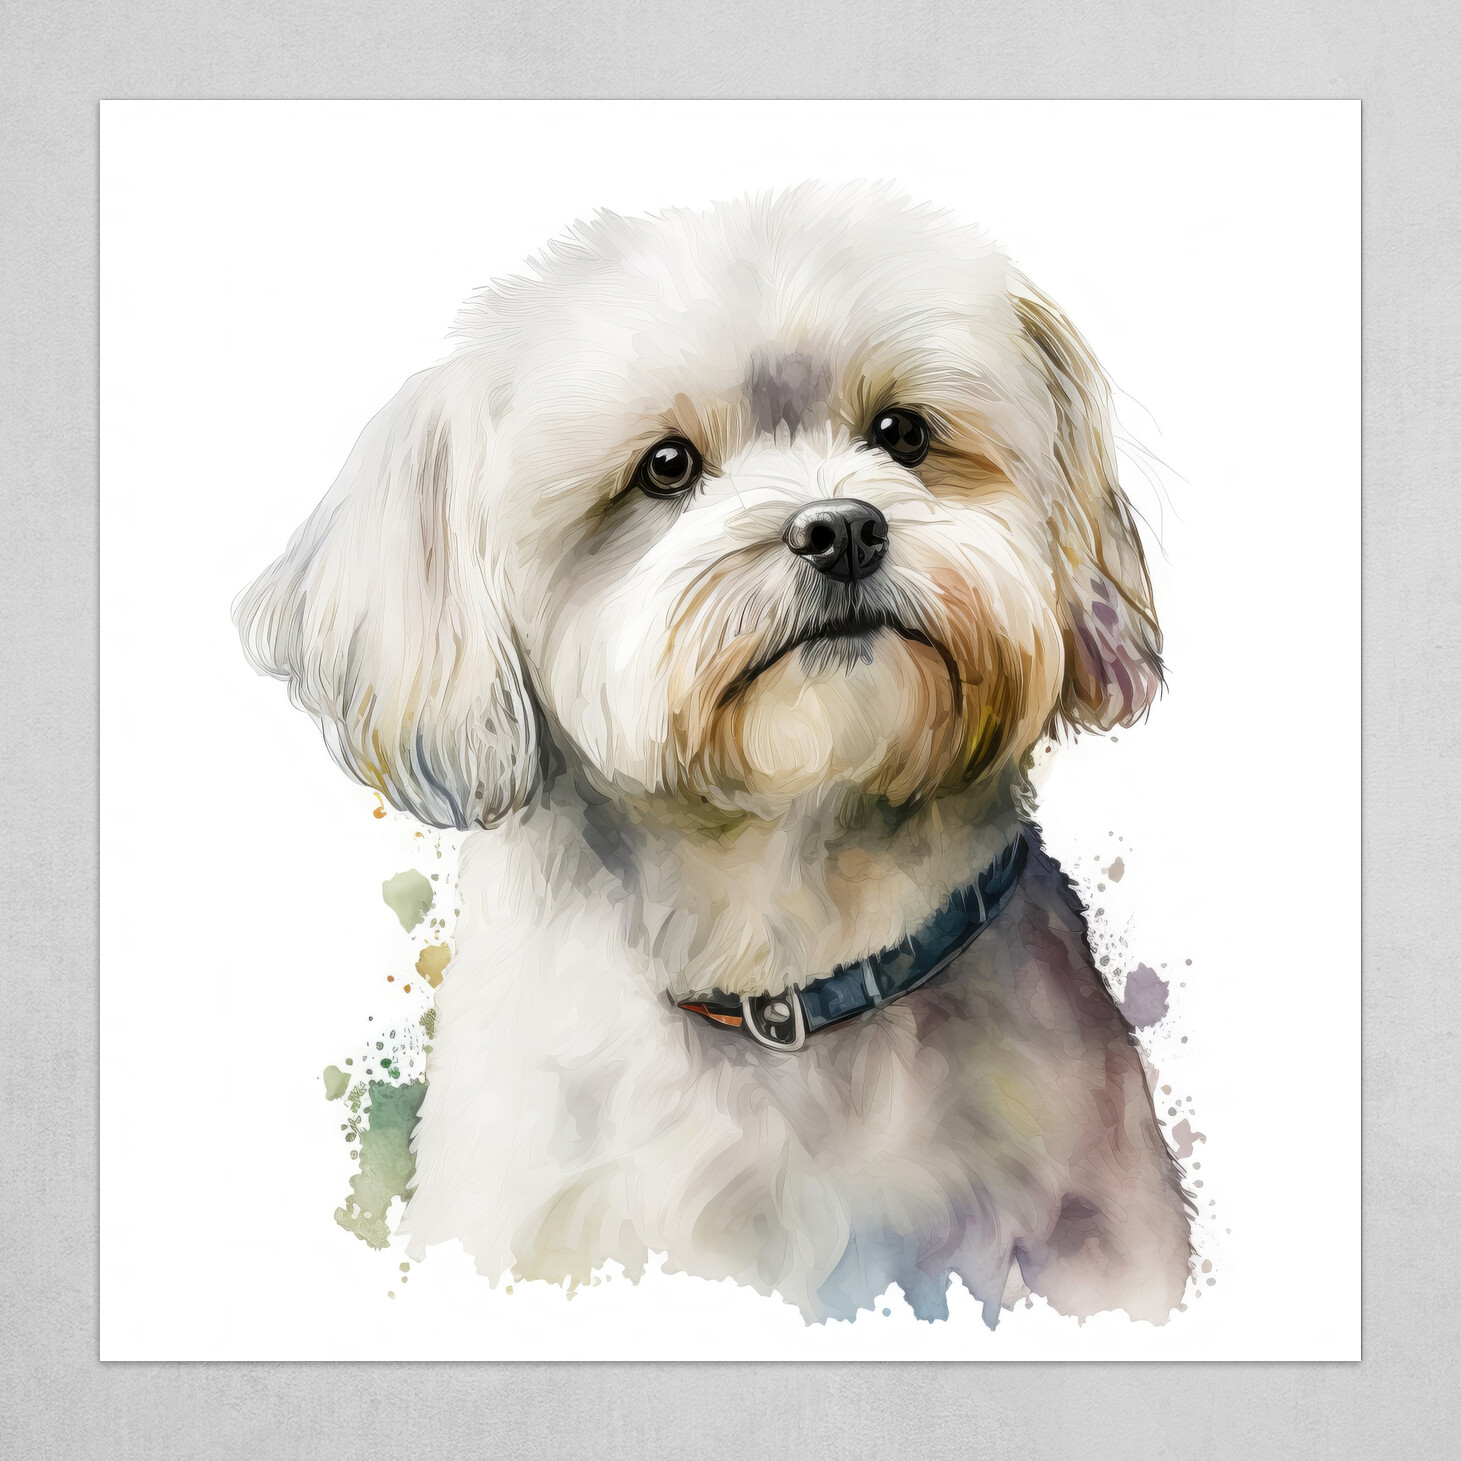 Maltese dog portrait (character, diet,care)